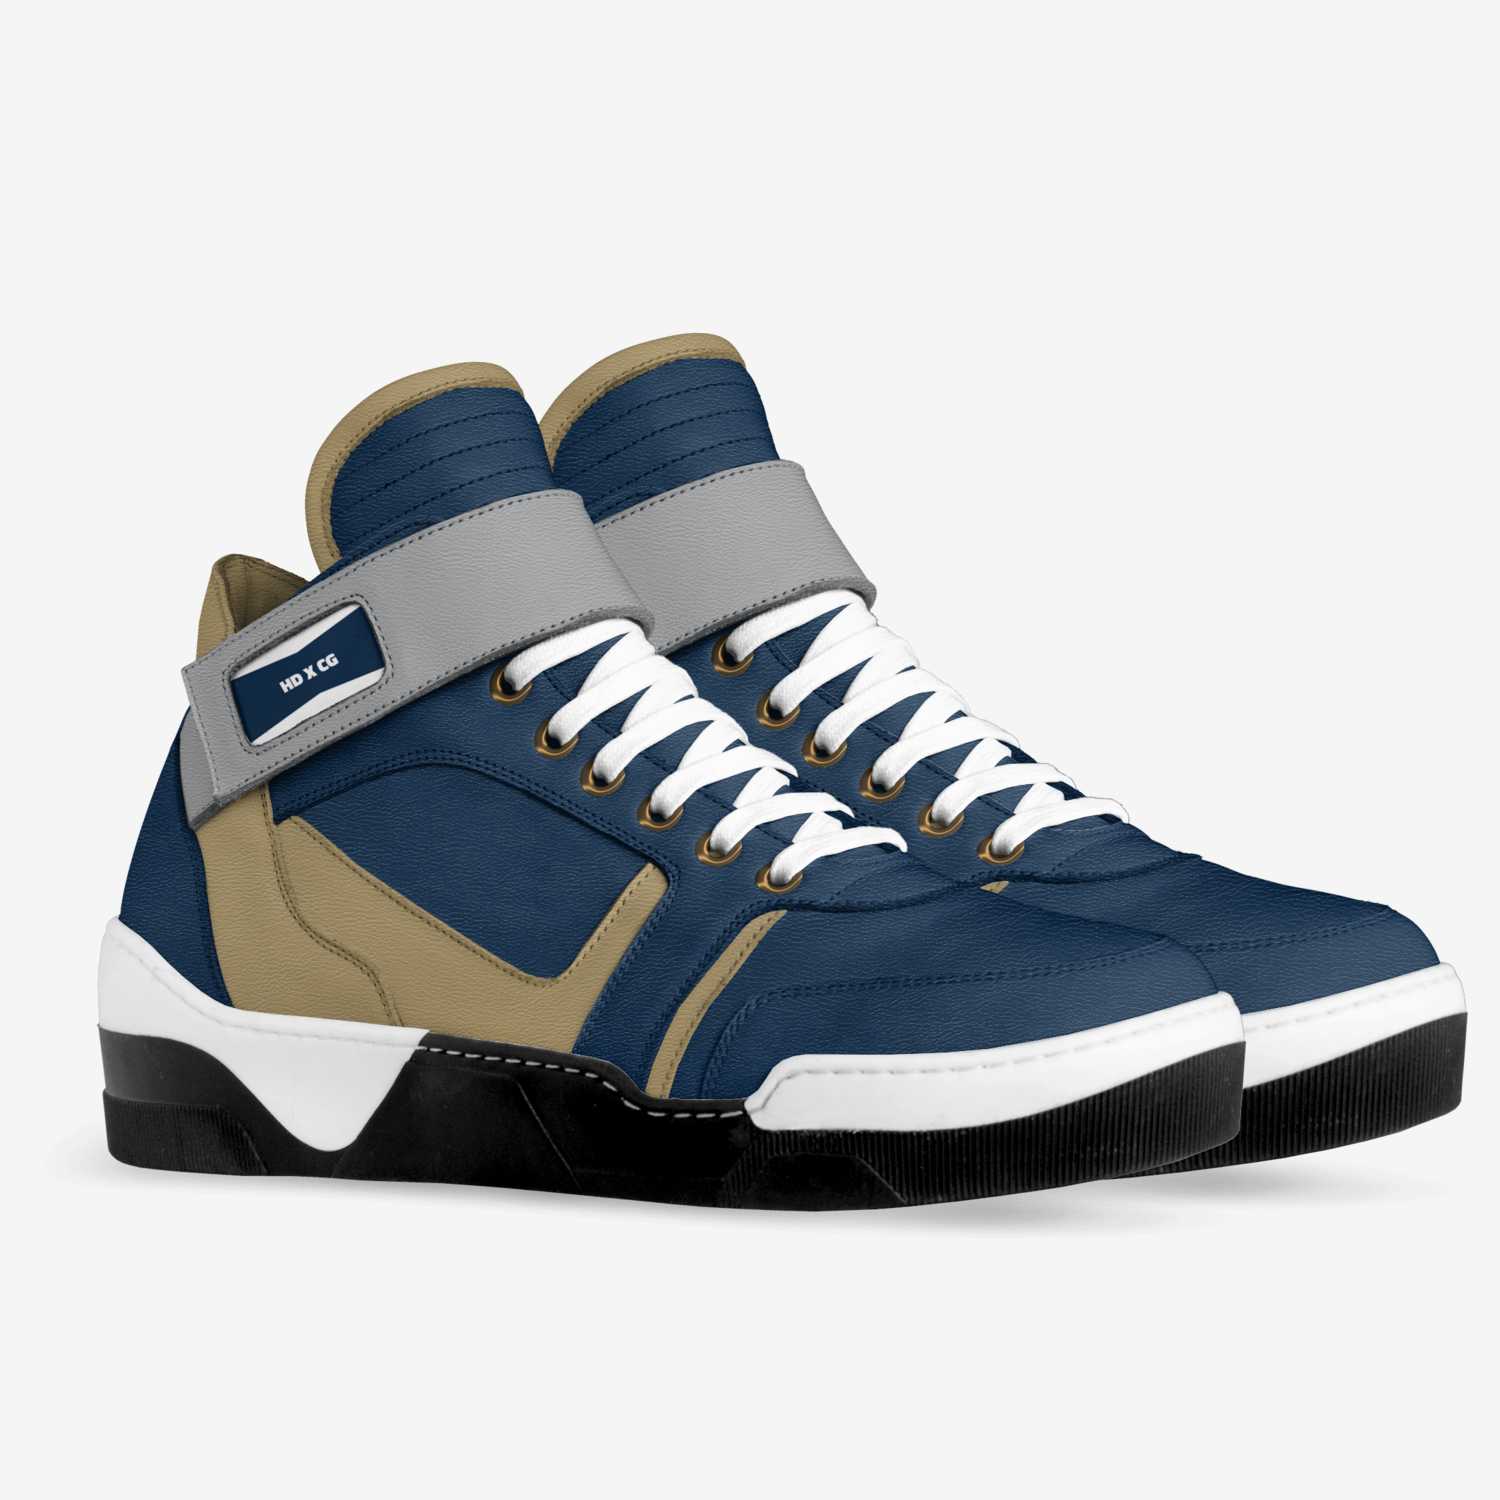 CG | A Custom Shoe concept by Grayson